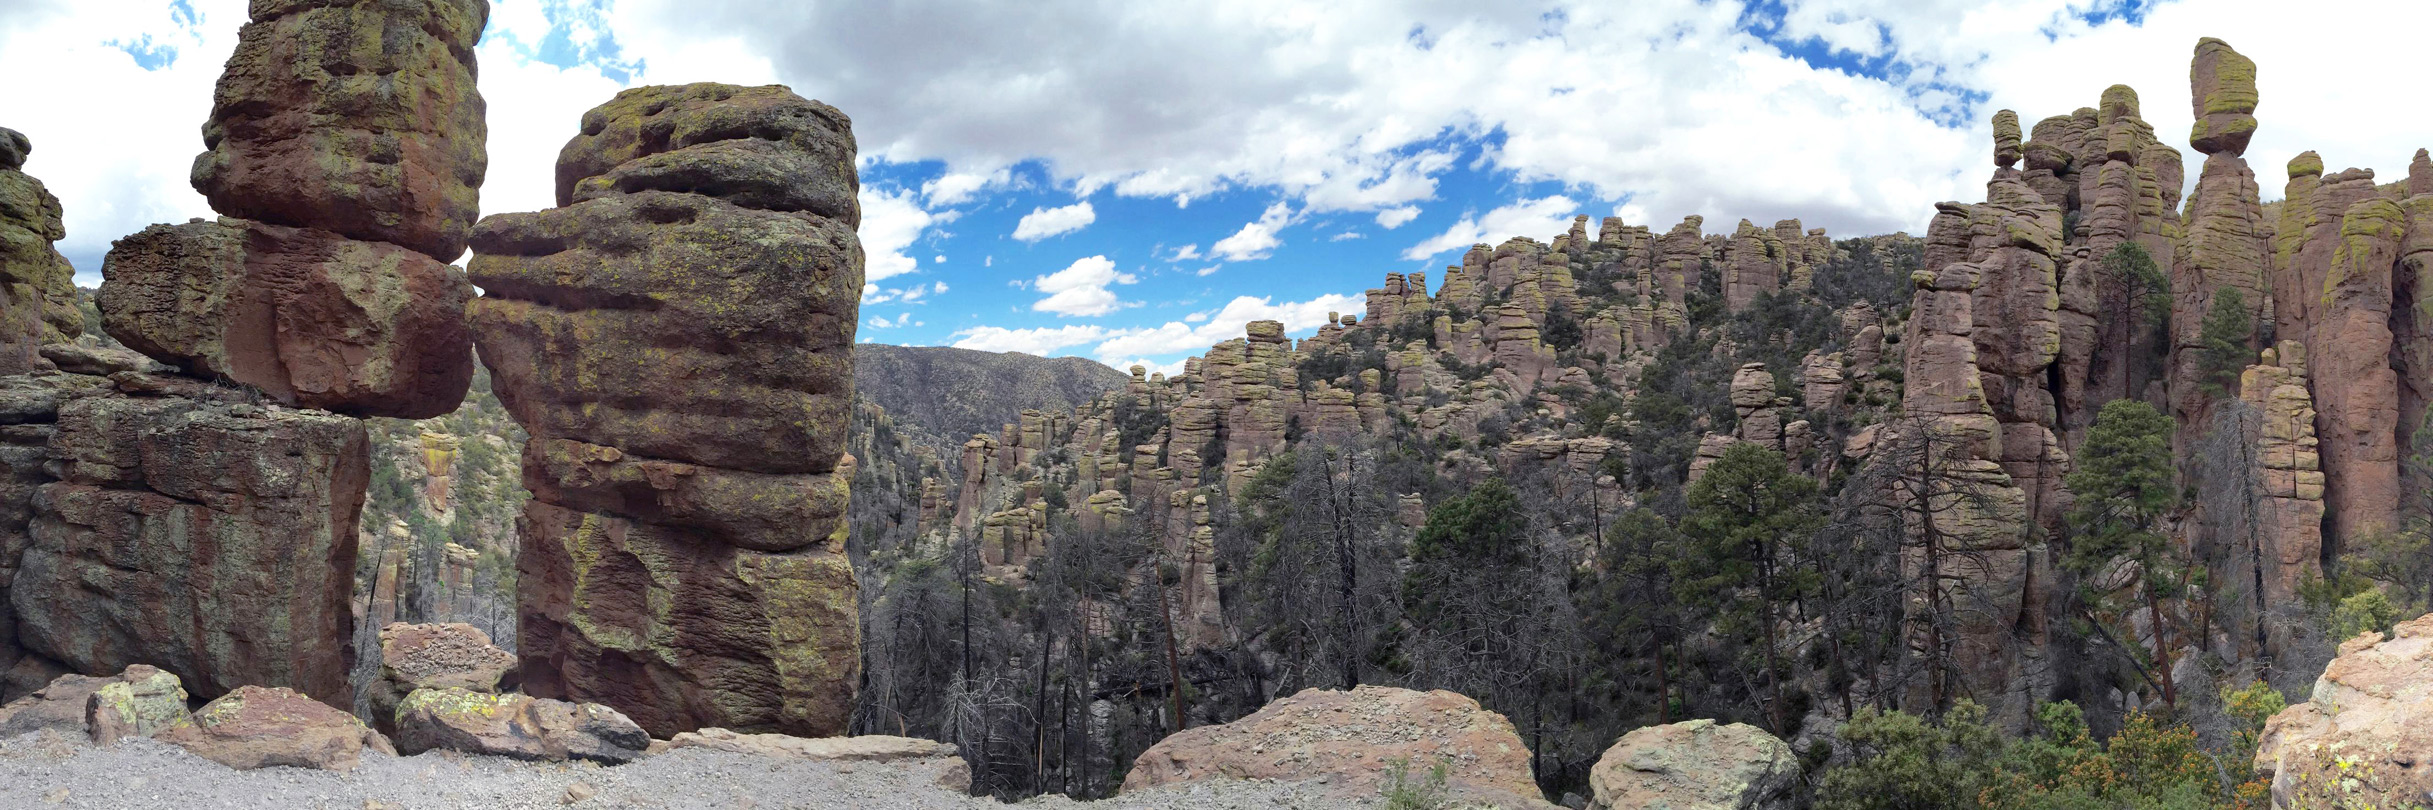 Pinnacles along the Echo Canyon Trail